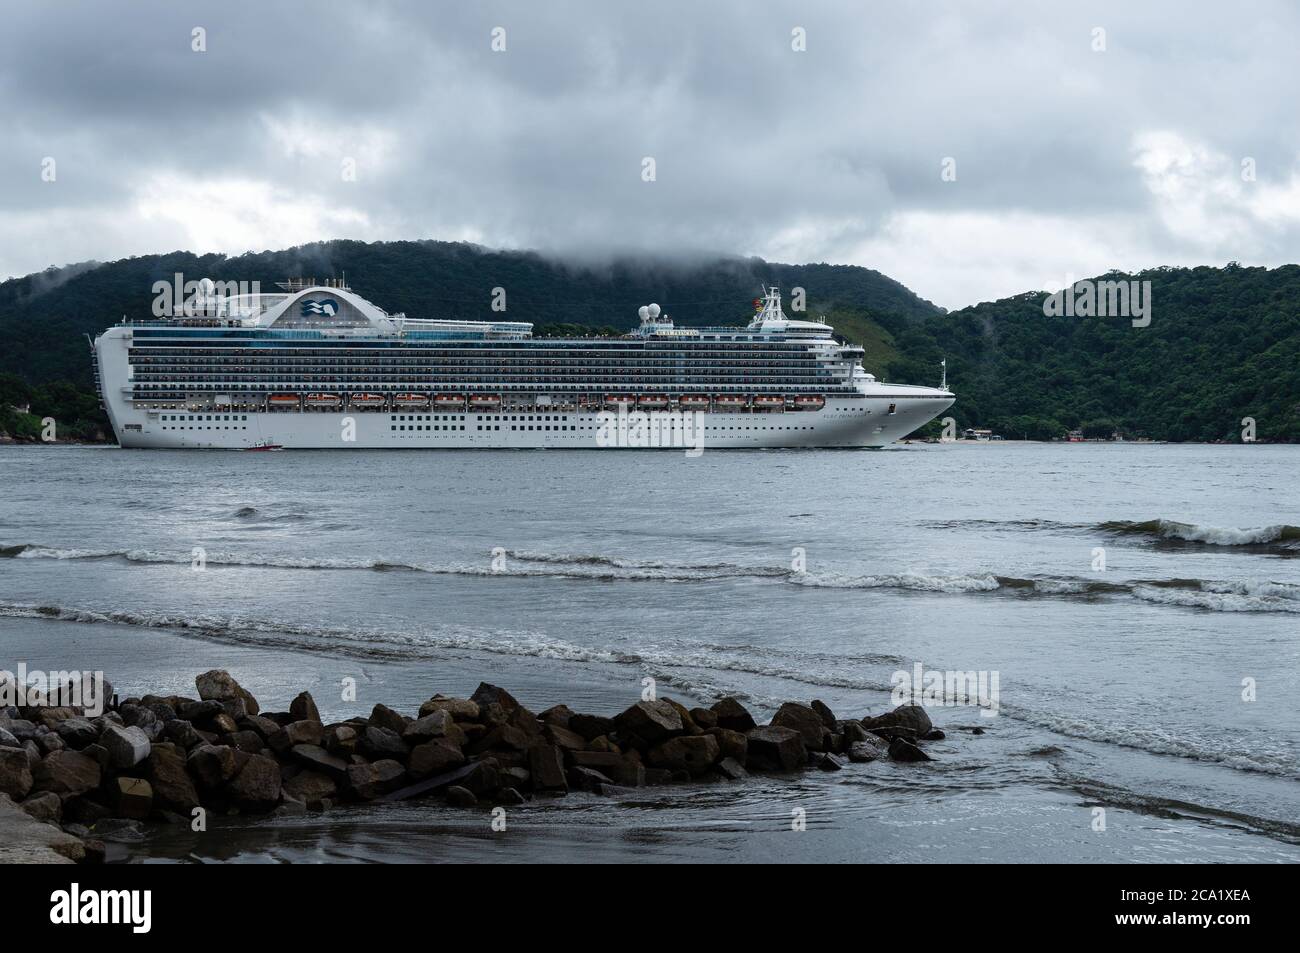 The Crown-class cruise ship 'Ruby Princess' leaving the Port of Santos under rainy overcast sky. View from Luiz La Scalla alderman square. Stock Photo